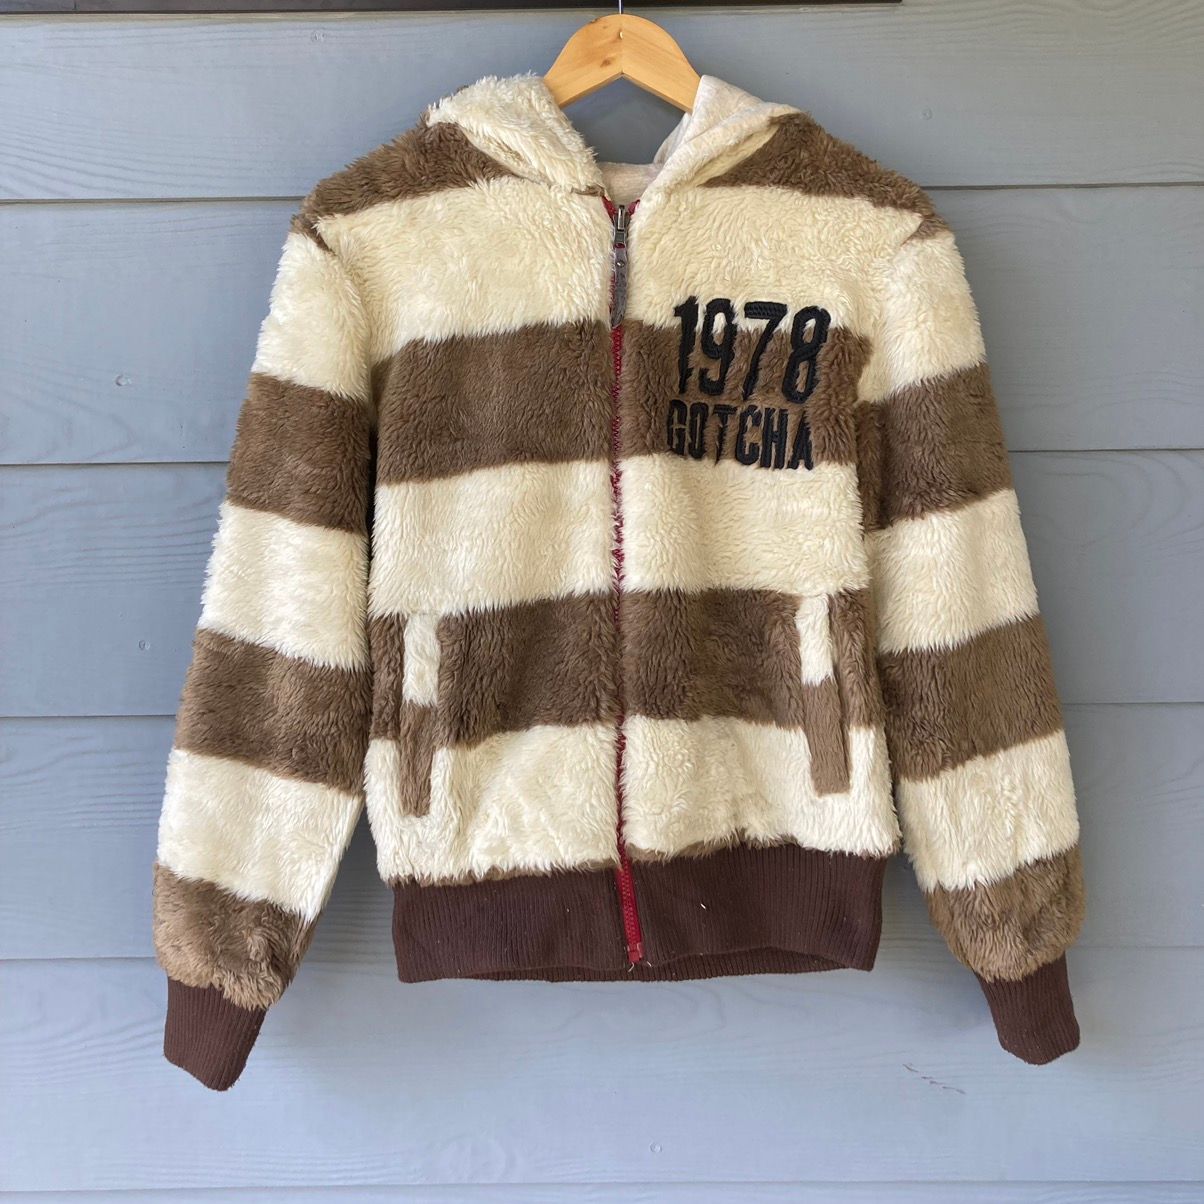 Outdoor Life - Vintage Gotcha Fleece Sweatshirt - 1